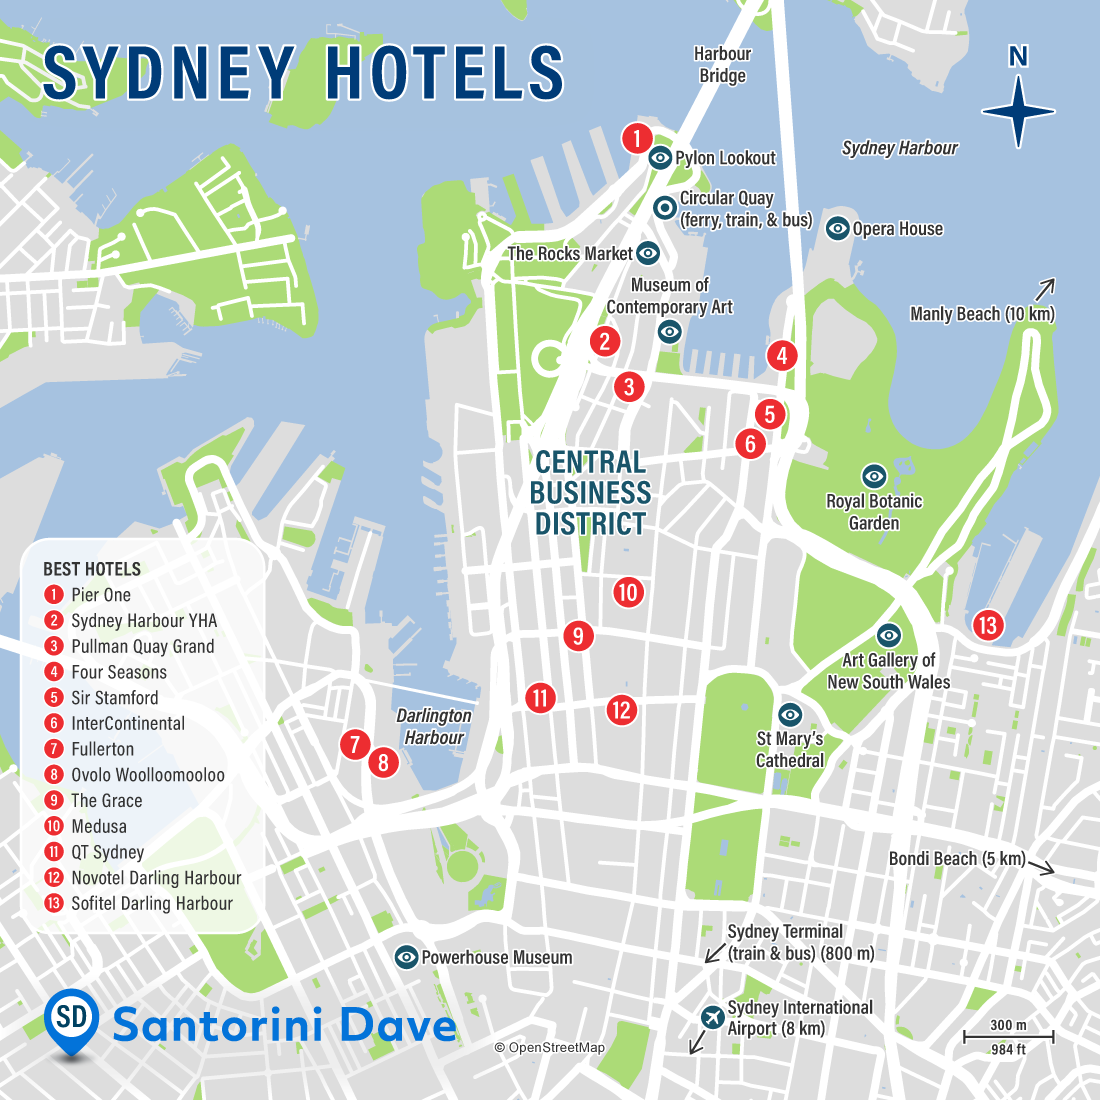 Map of Sydney Hotels and Neighborhoods